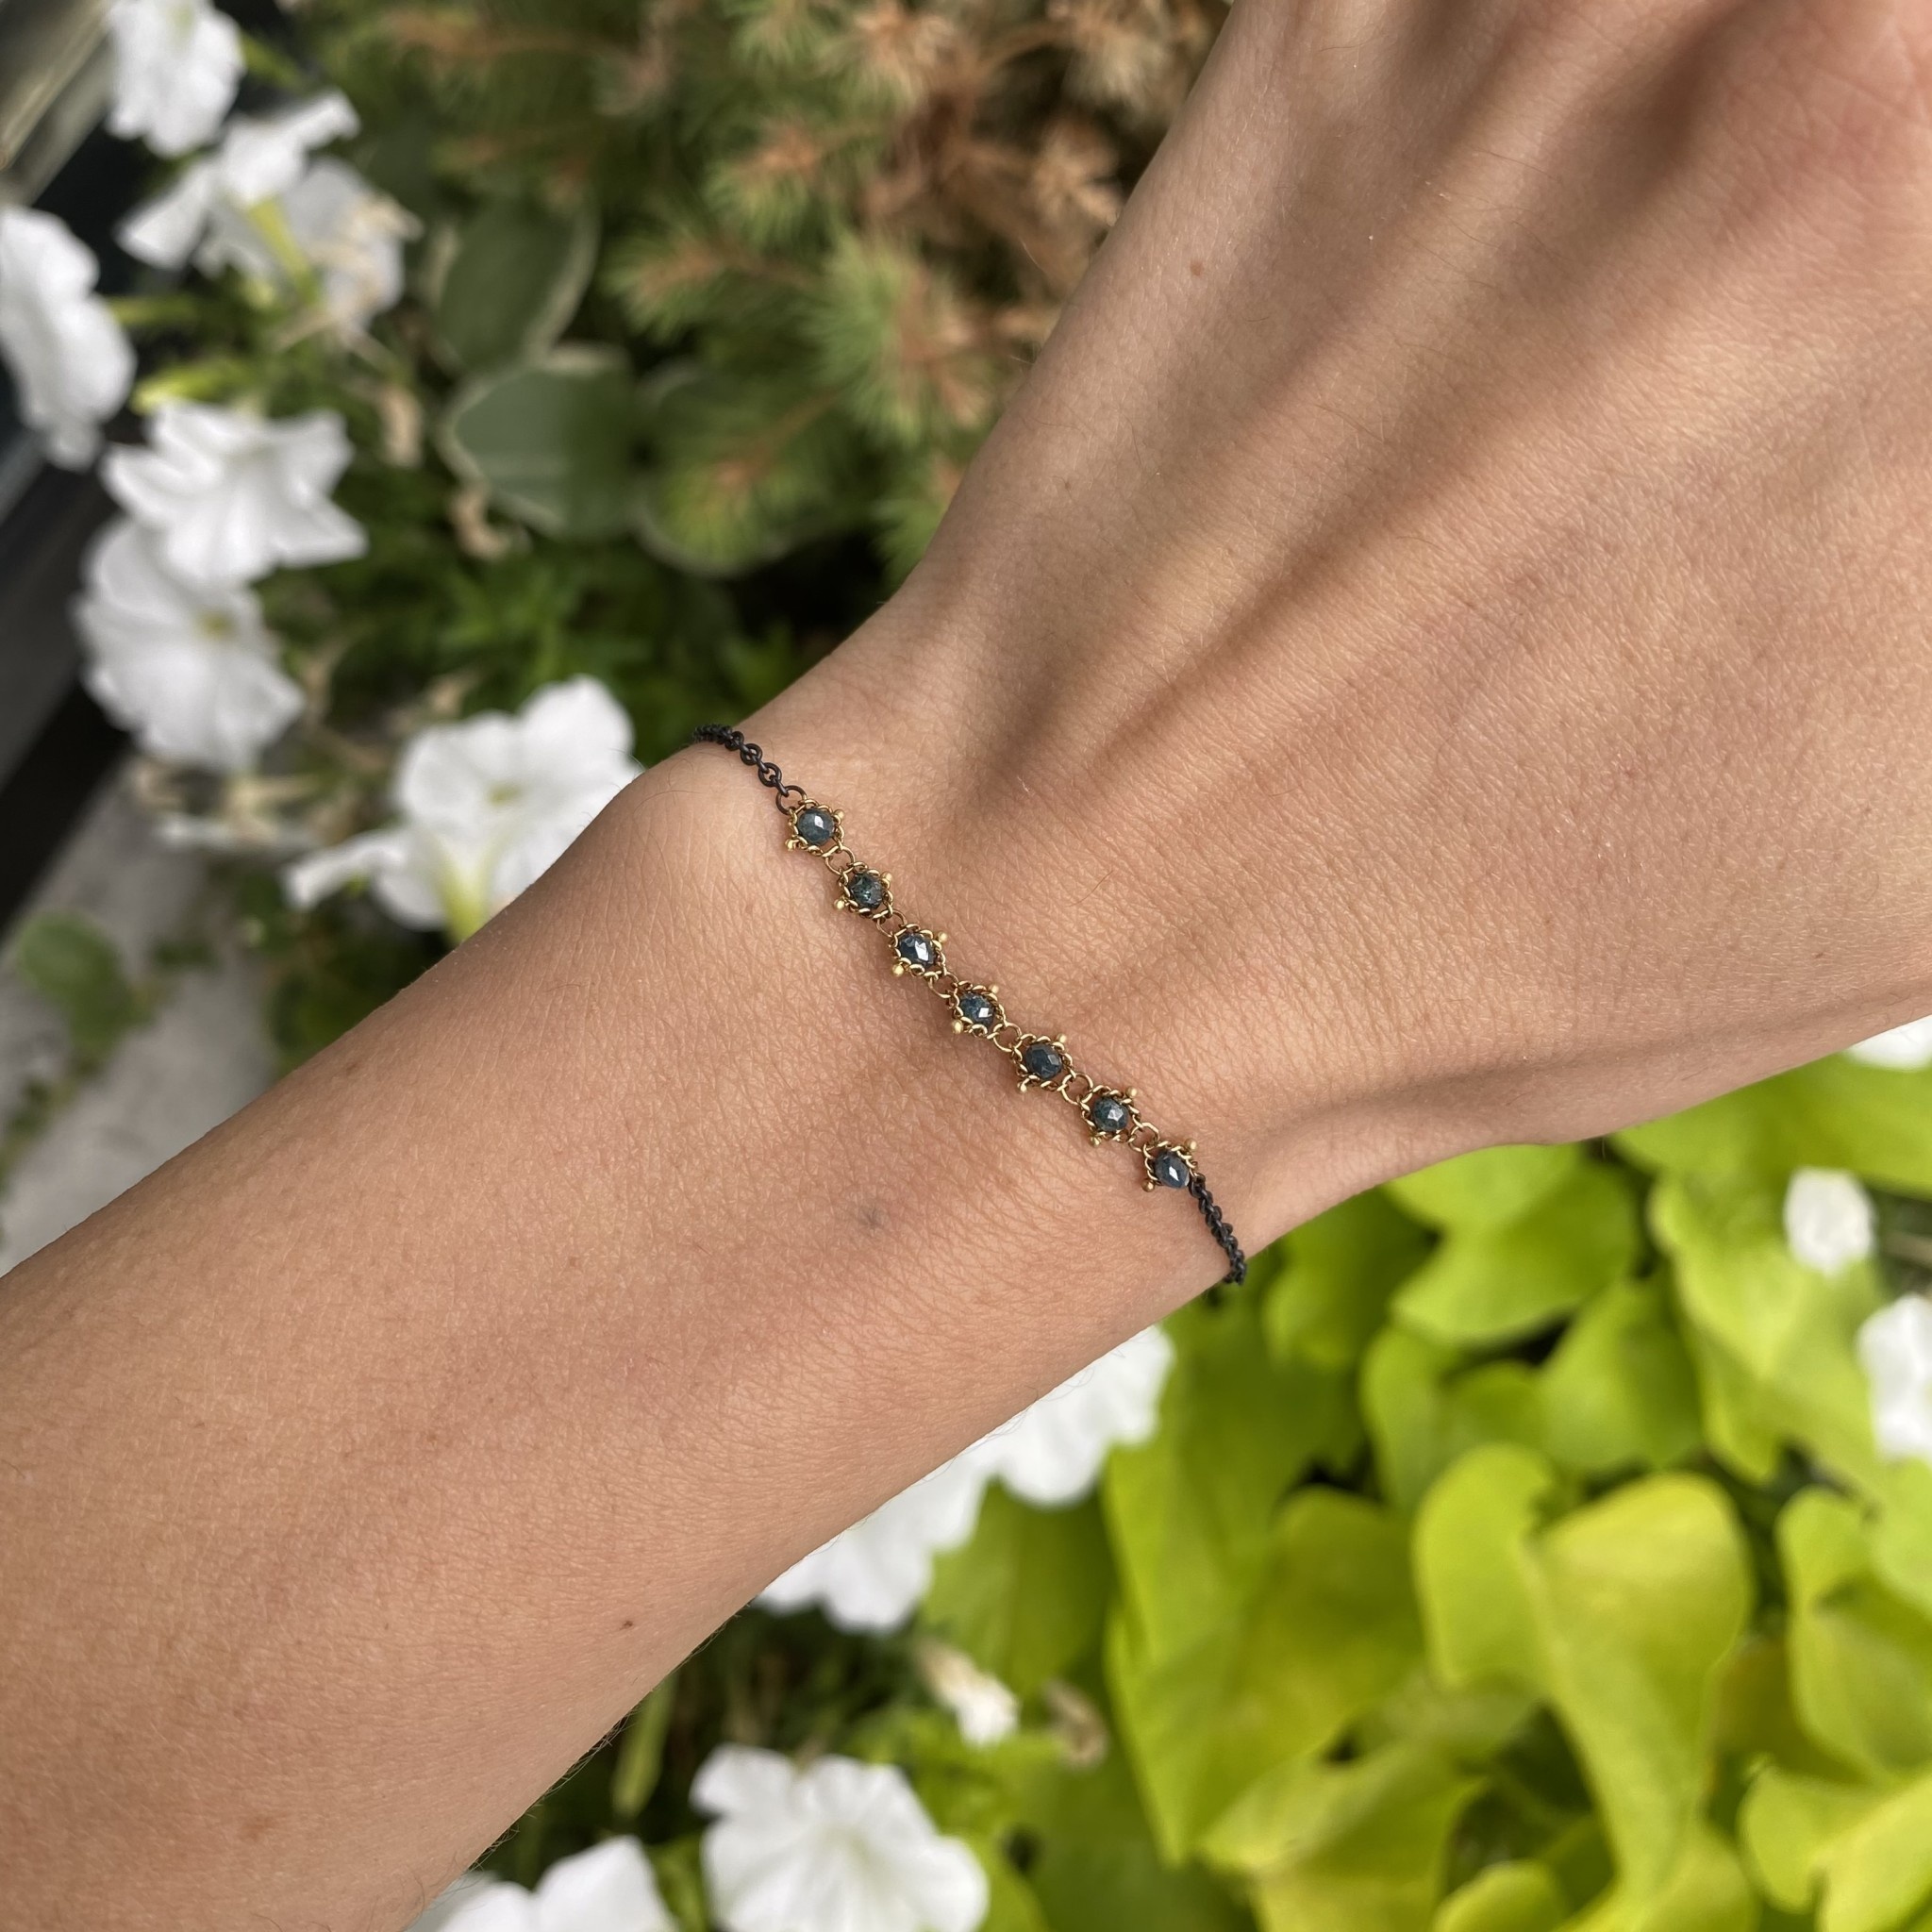 DIY Oxidized Pandora Bracelet – My Charm Collection